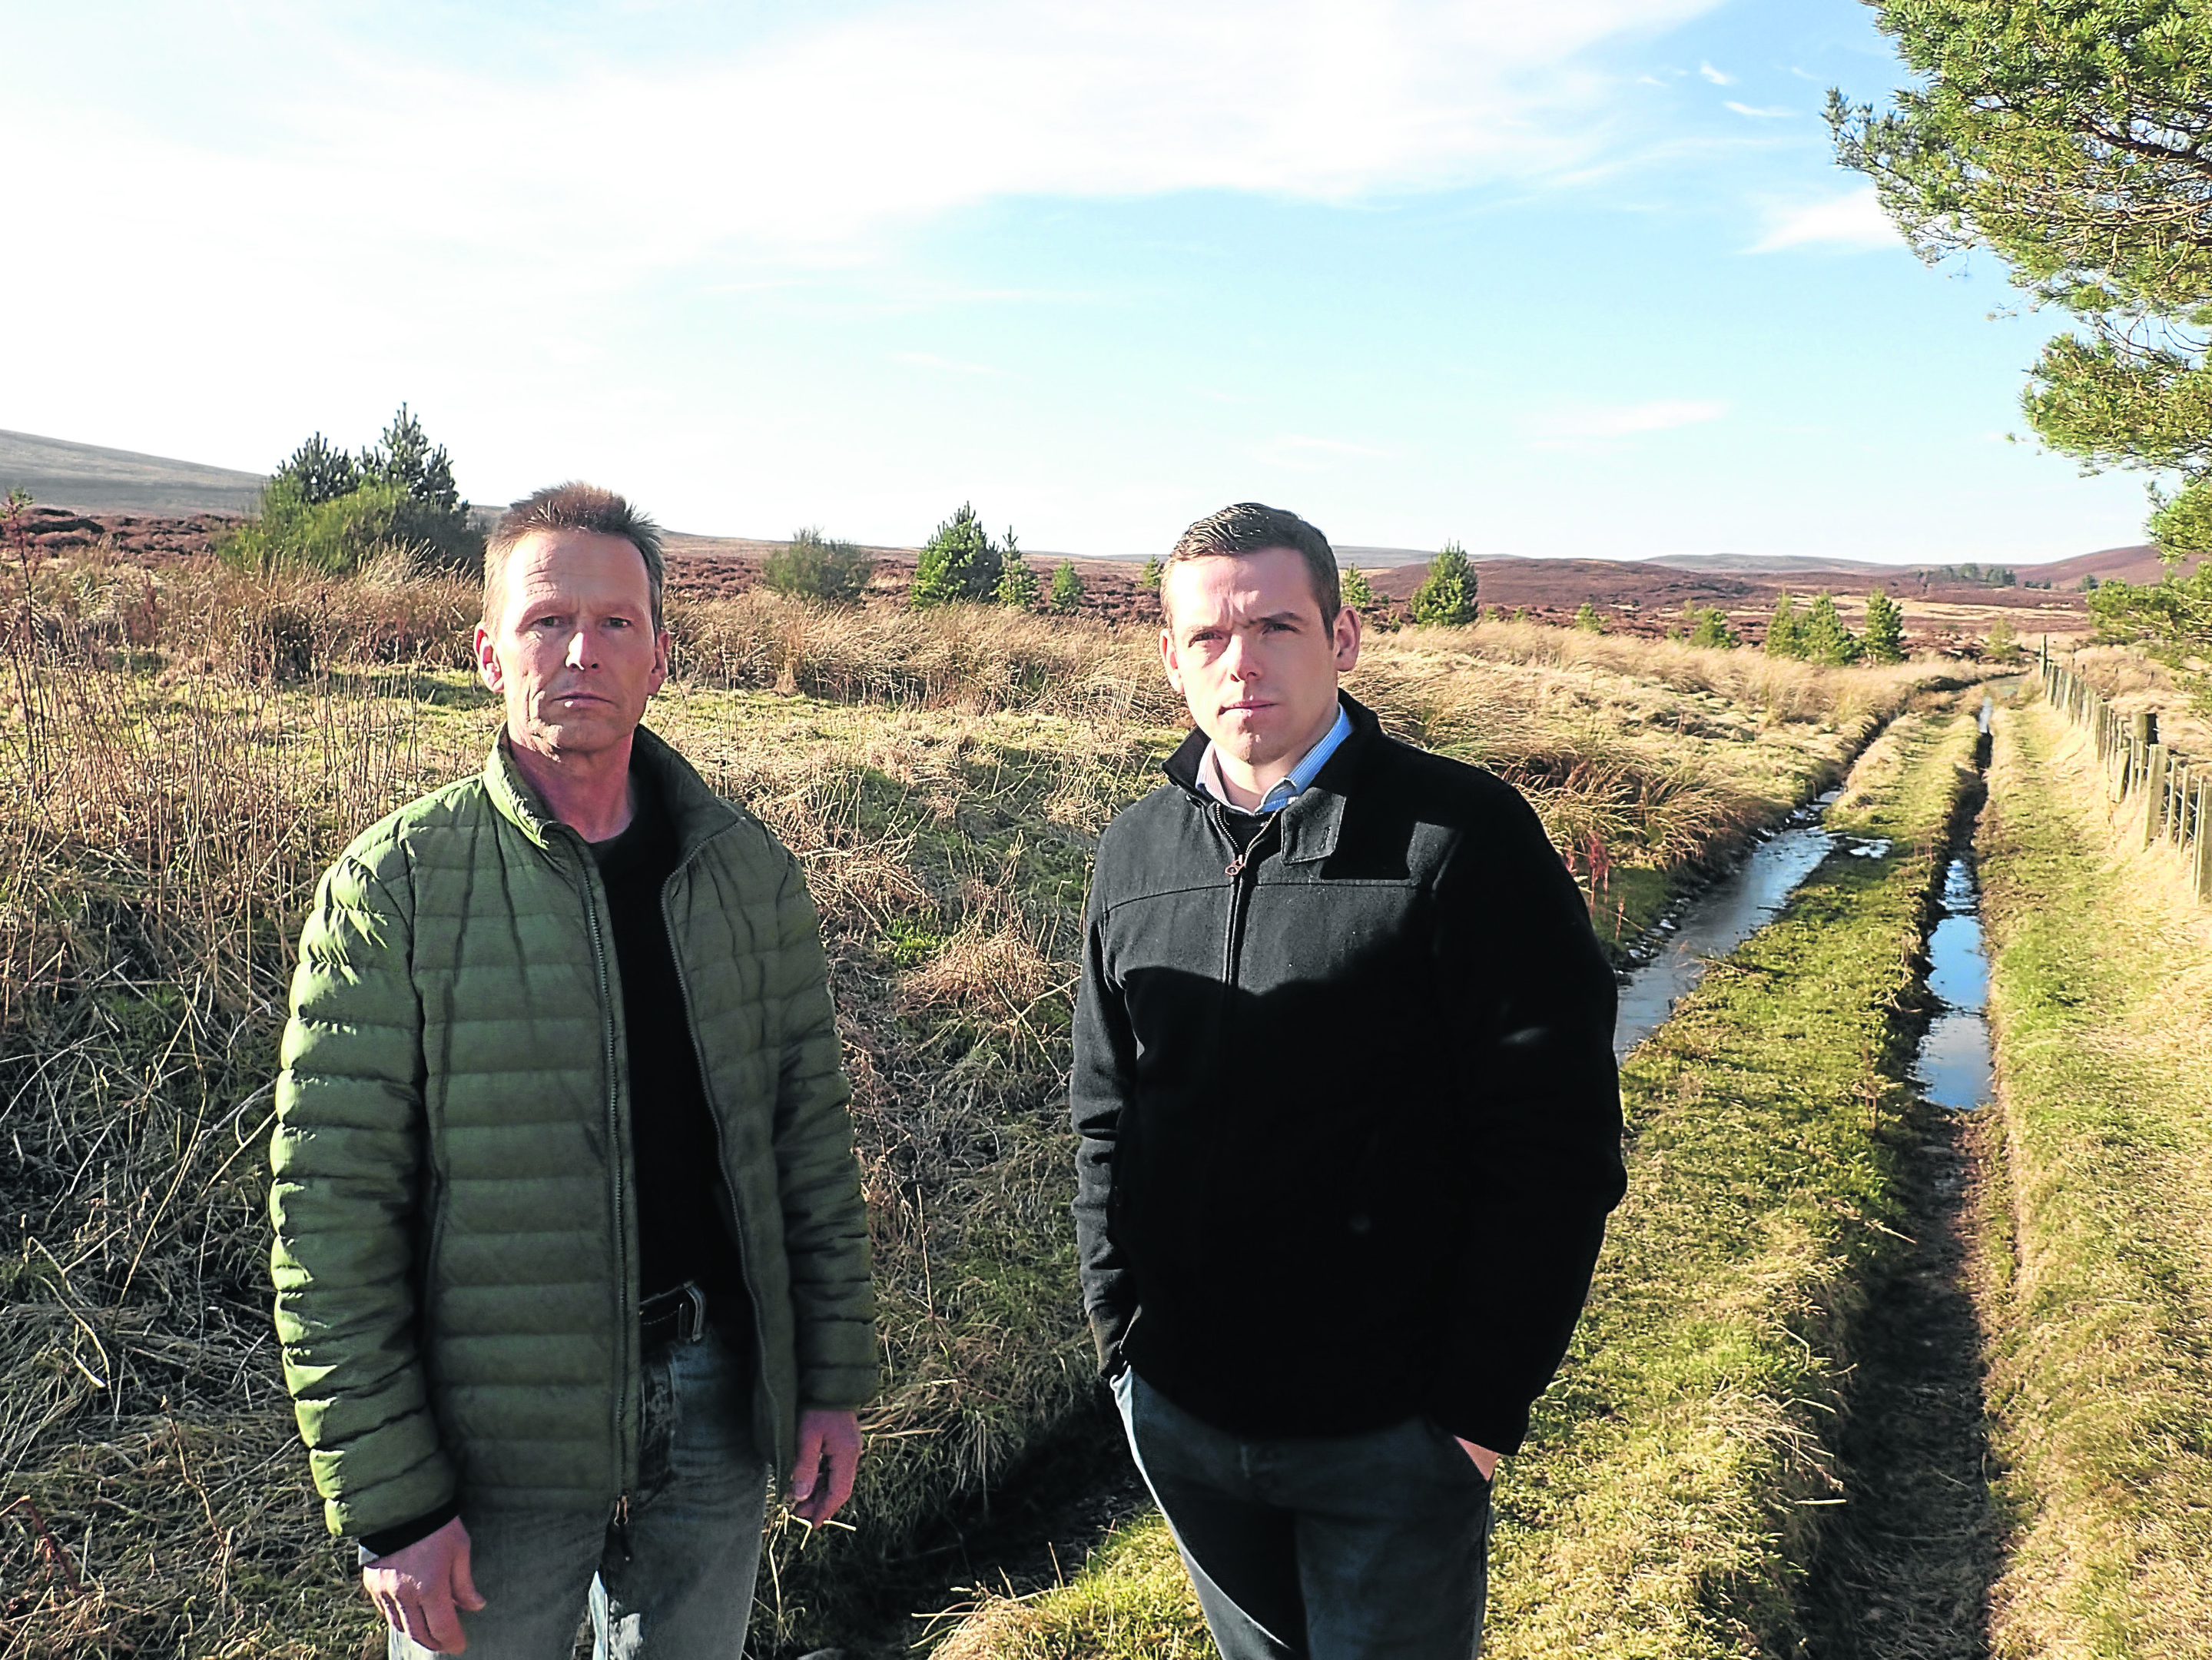 Moray MP Douglas Ross, right, at Knockando windfarm site with local businessman Joerg Bondzio who fears for his livelihood